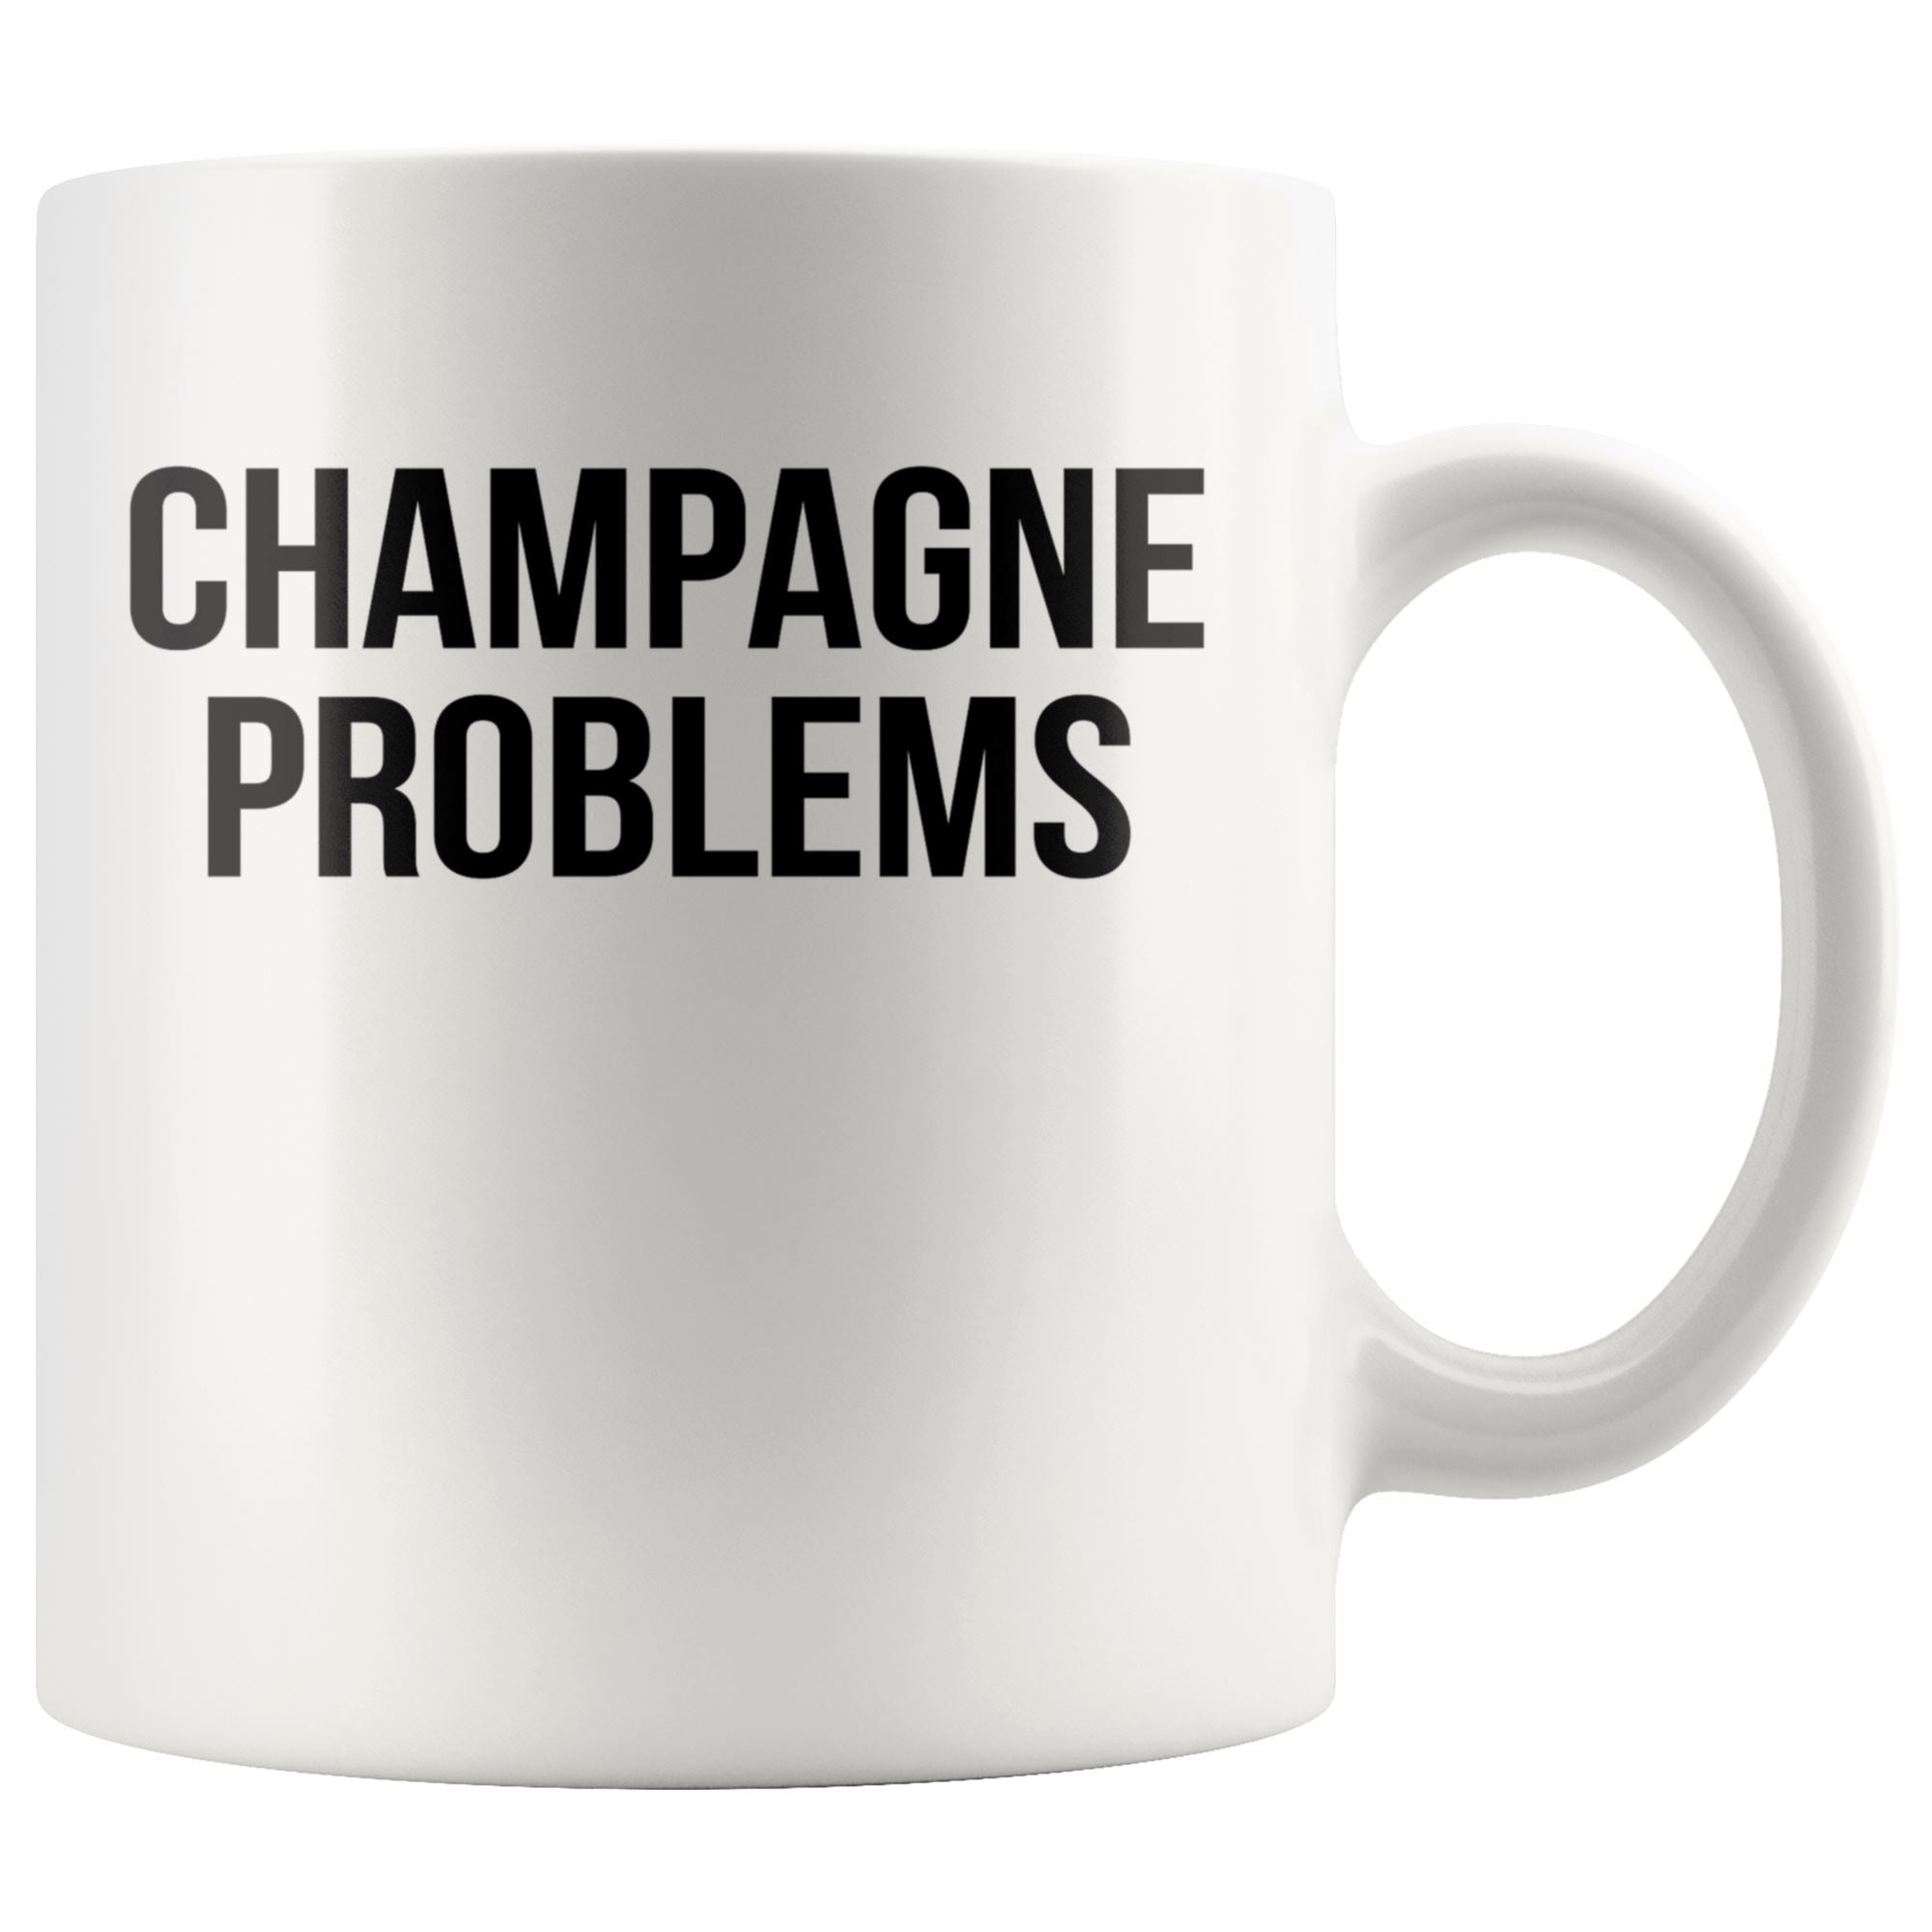 Champagne Problems Drinkware teelaunch 11oz Mug 